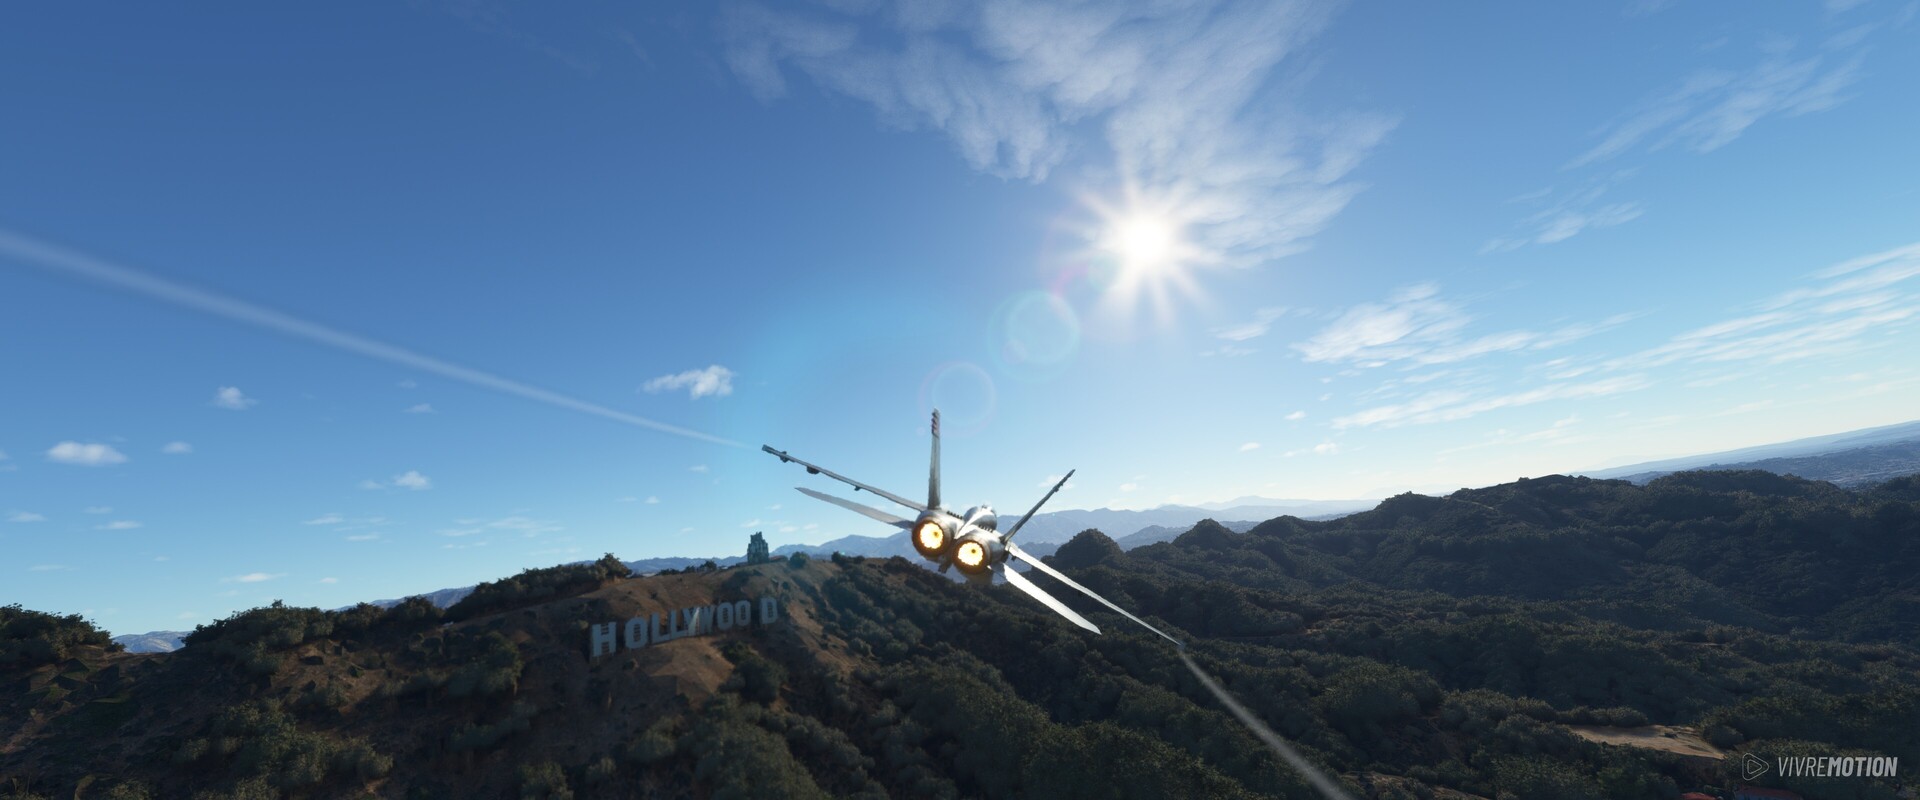 Hollywood Los Angeles, Kalifornien - Boeing F/A-18 Super Hornet - Microsoft Flight Simulator - VIVRE-MOTION